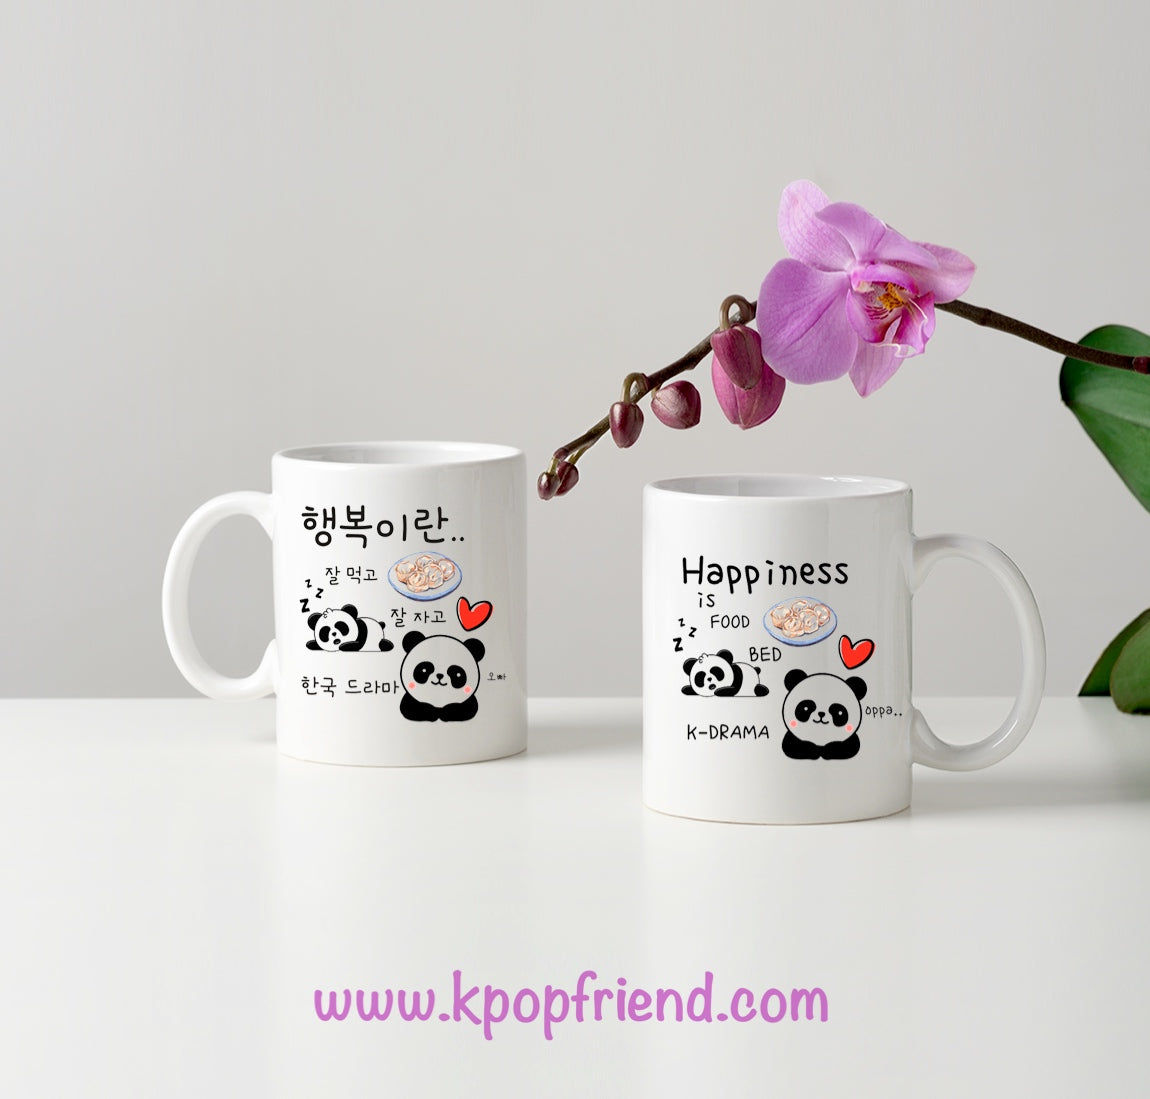 K Drama mug, Funny Tea Mug, Funny Coffee Mug, Gifts For Her, Gifts For Korean Drama addict, korean tv, Cute Mug, Tea Gifts, Tea Drinker Gift